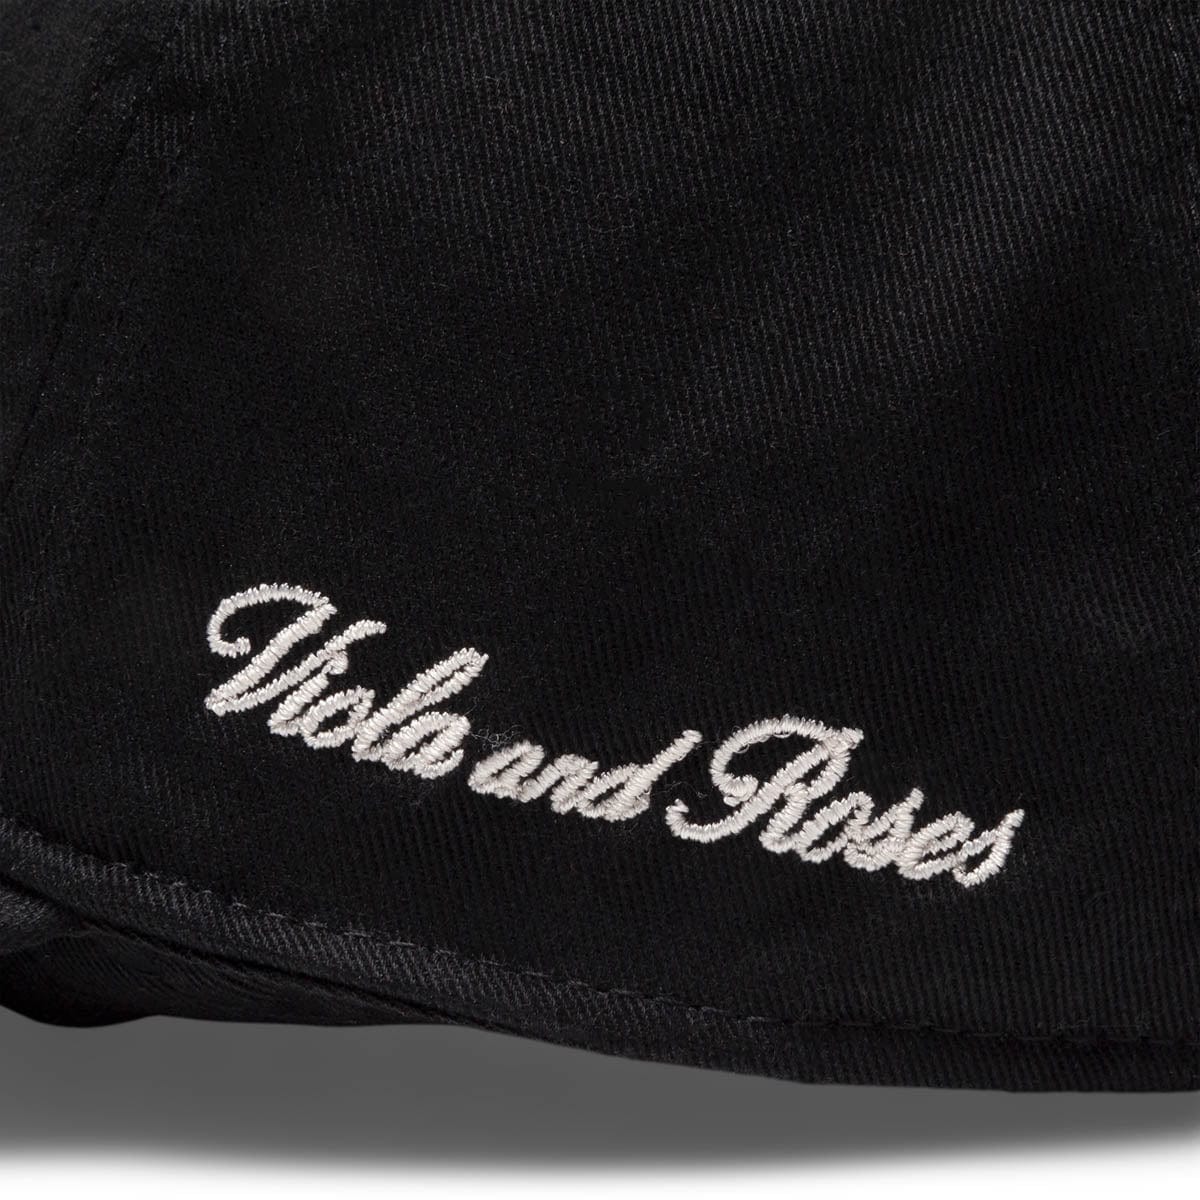 Viola and Roses Headwear BLACK / O/S STADIUM CAP